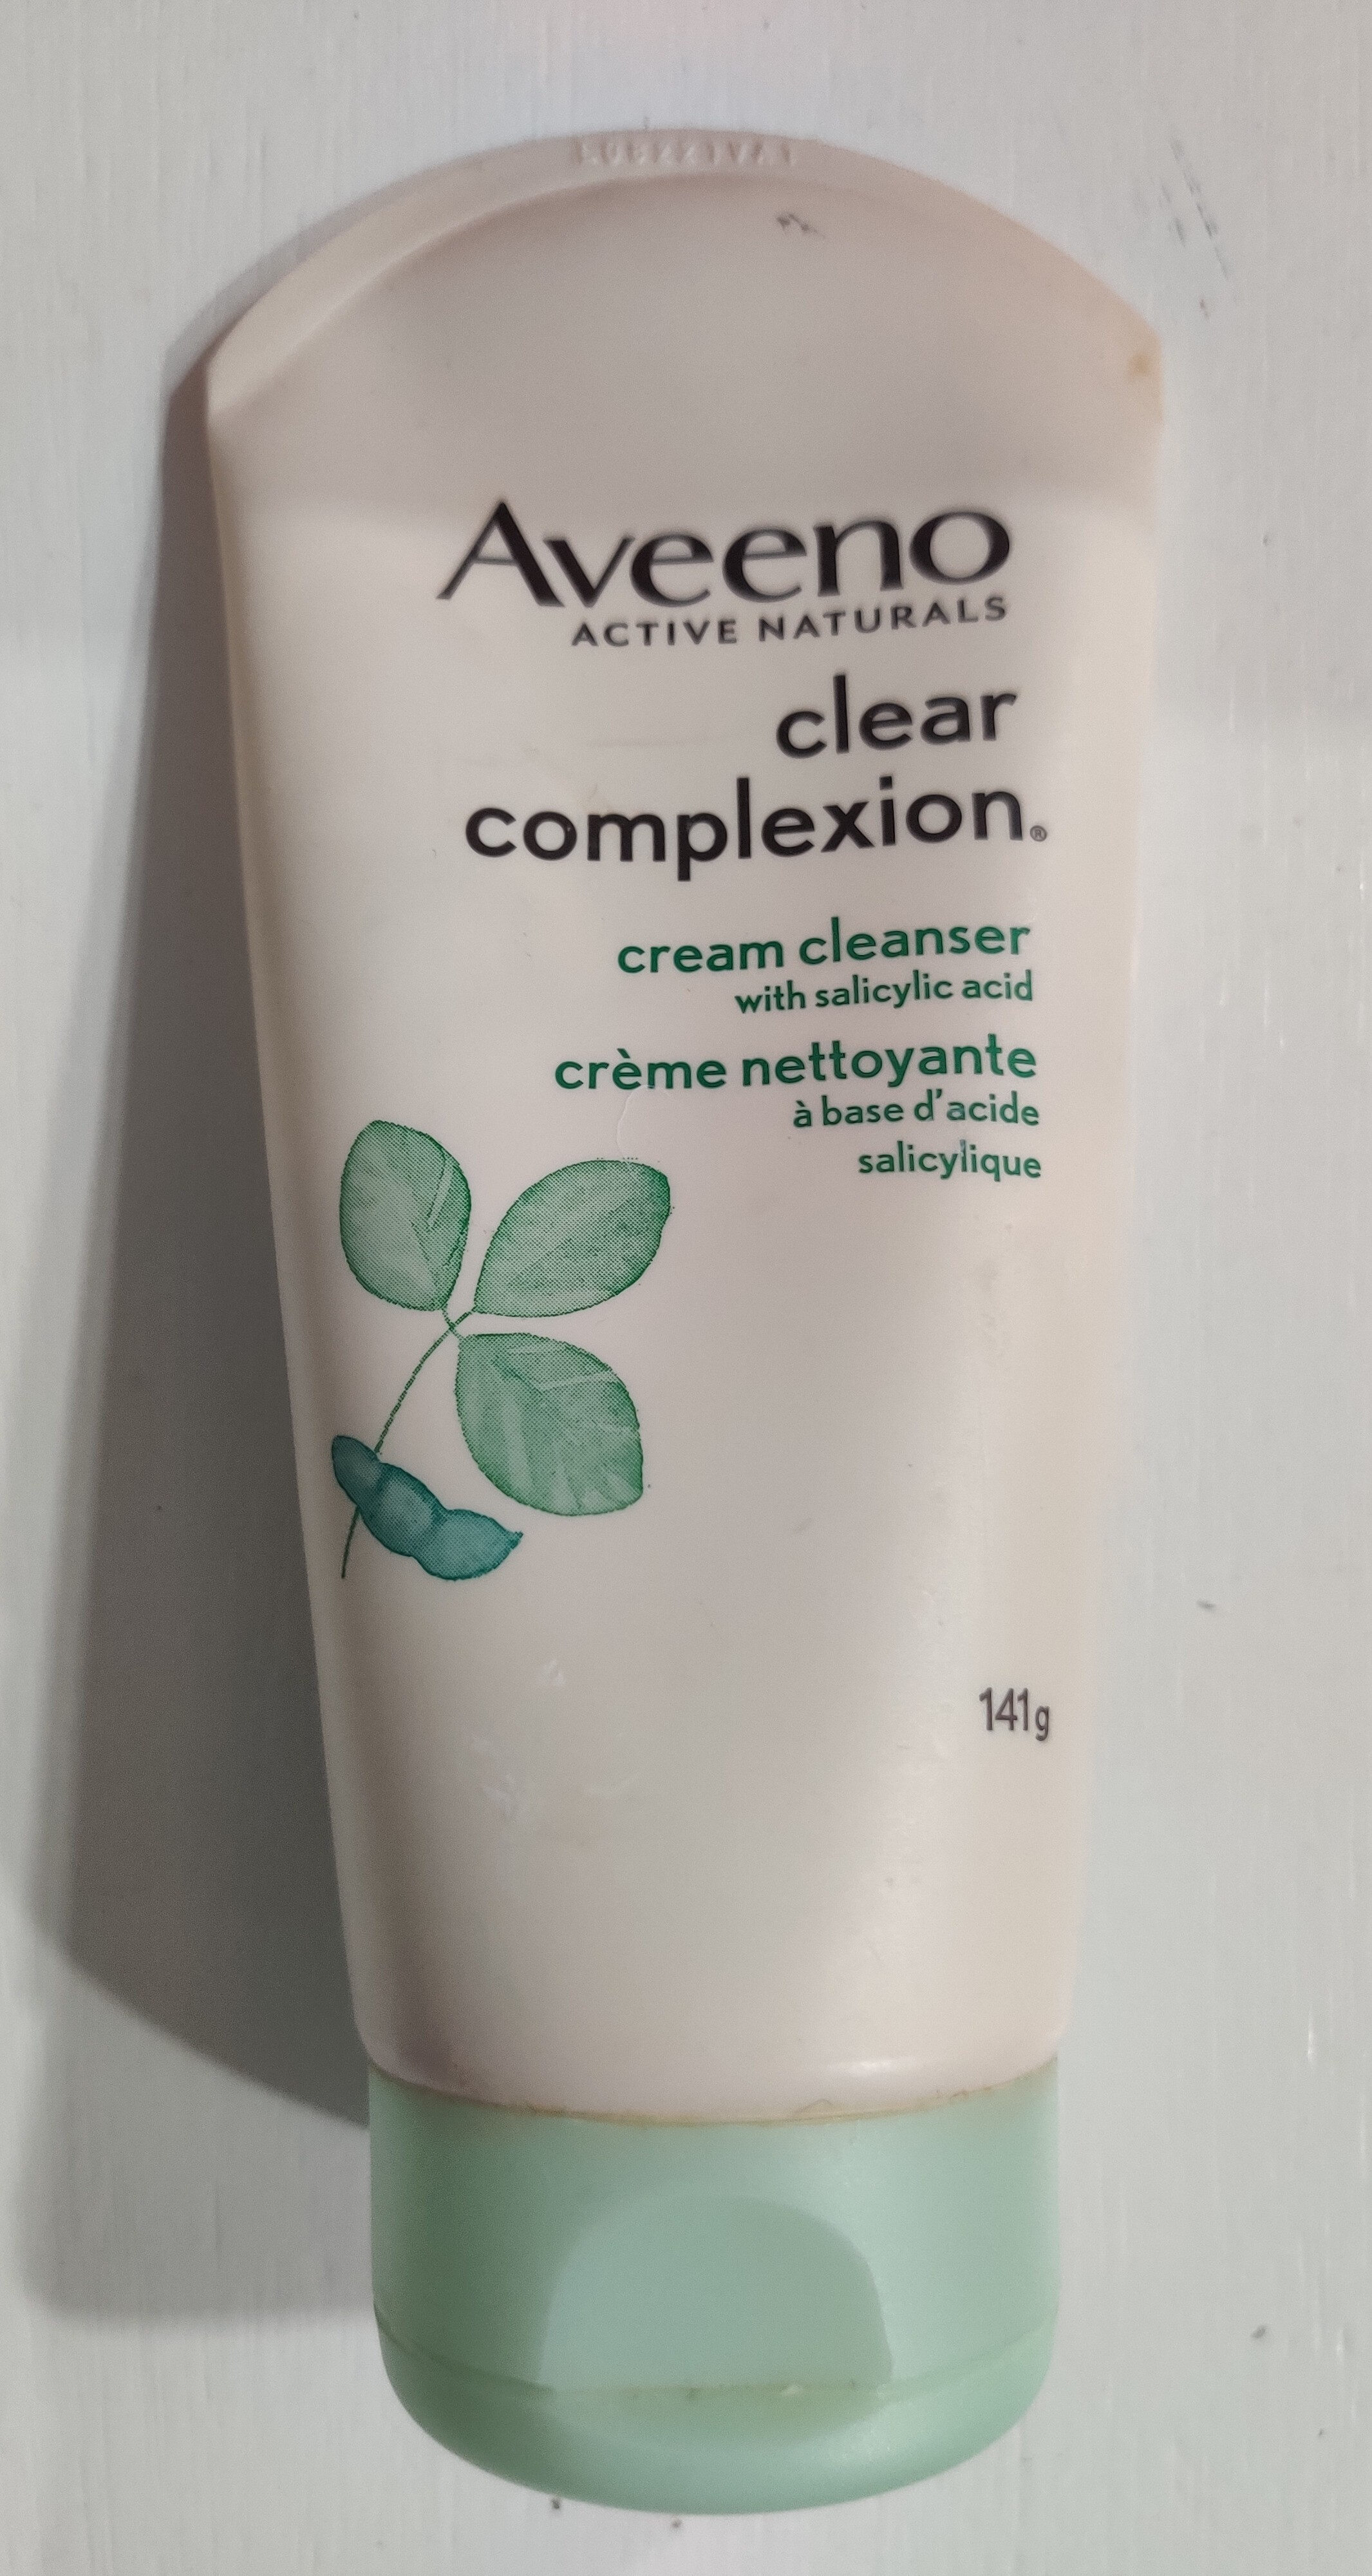 Aveeno clear completion cream cleanser - Produto - en